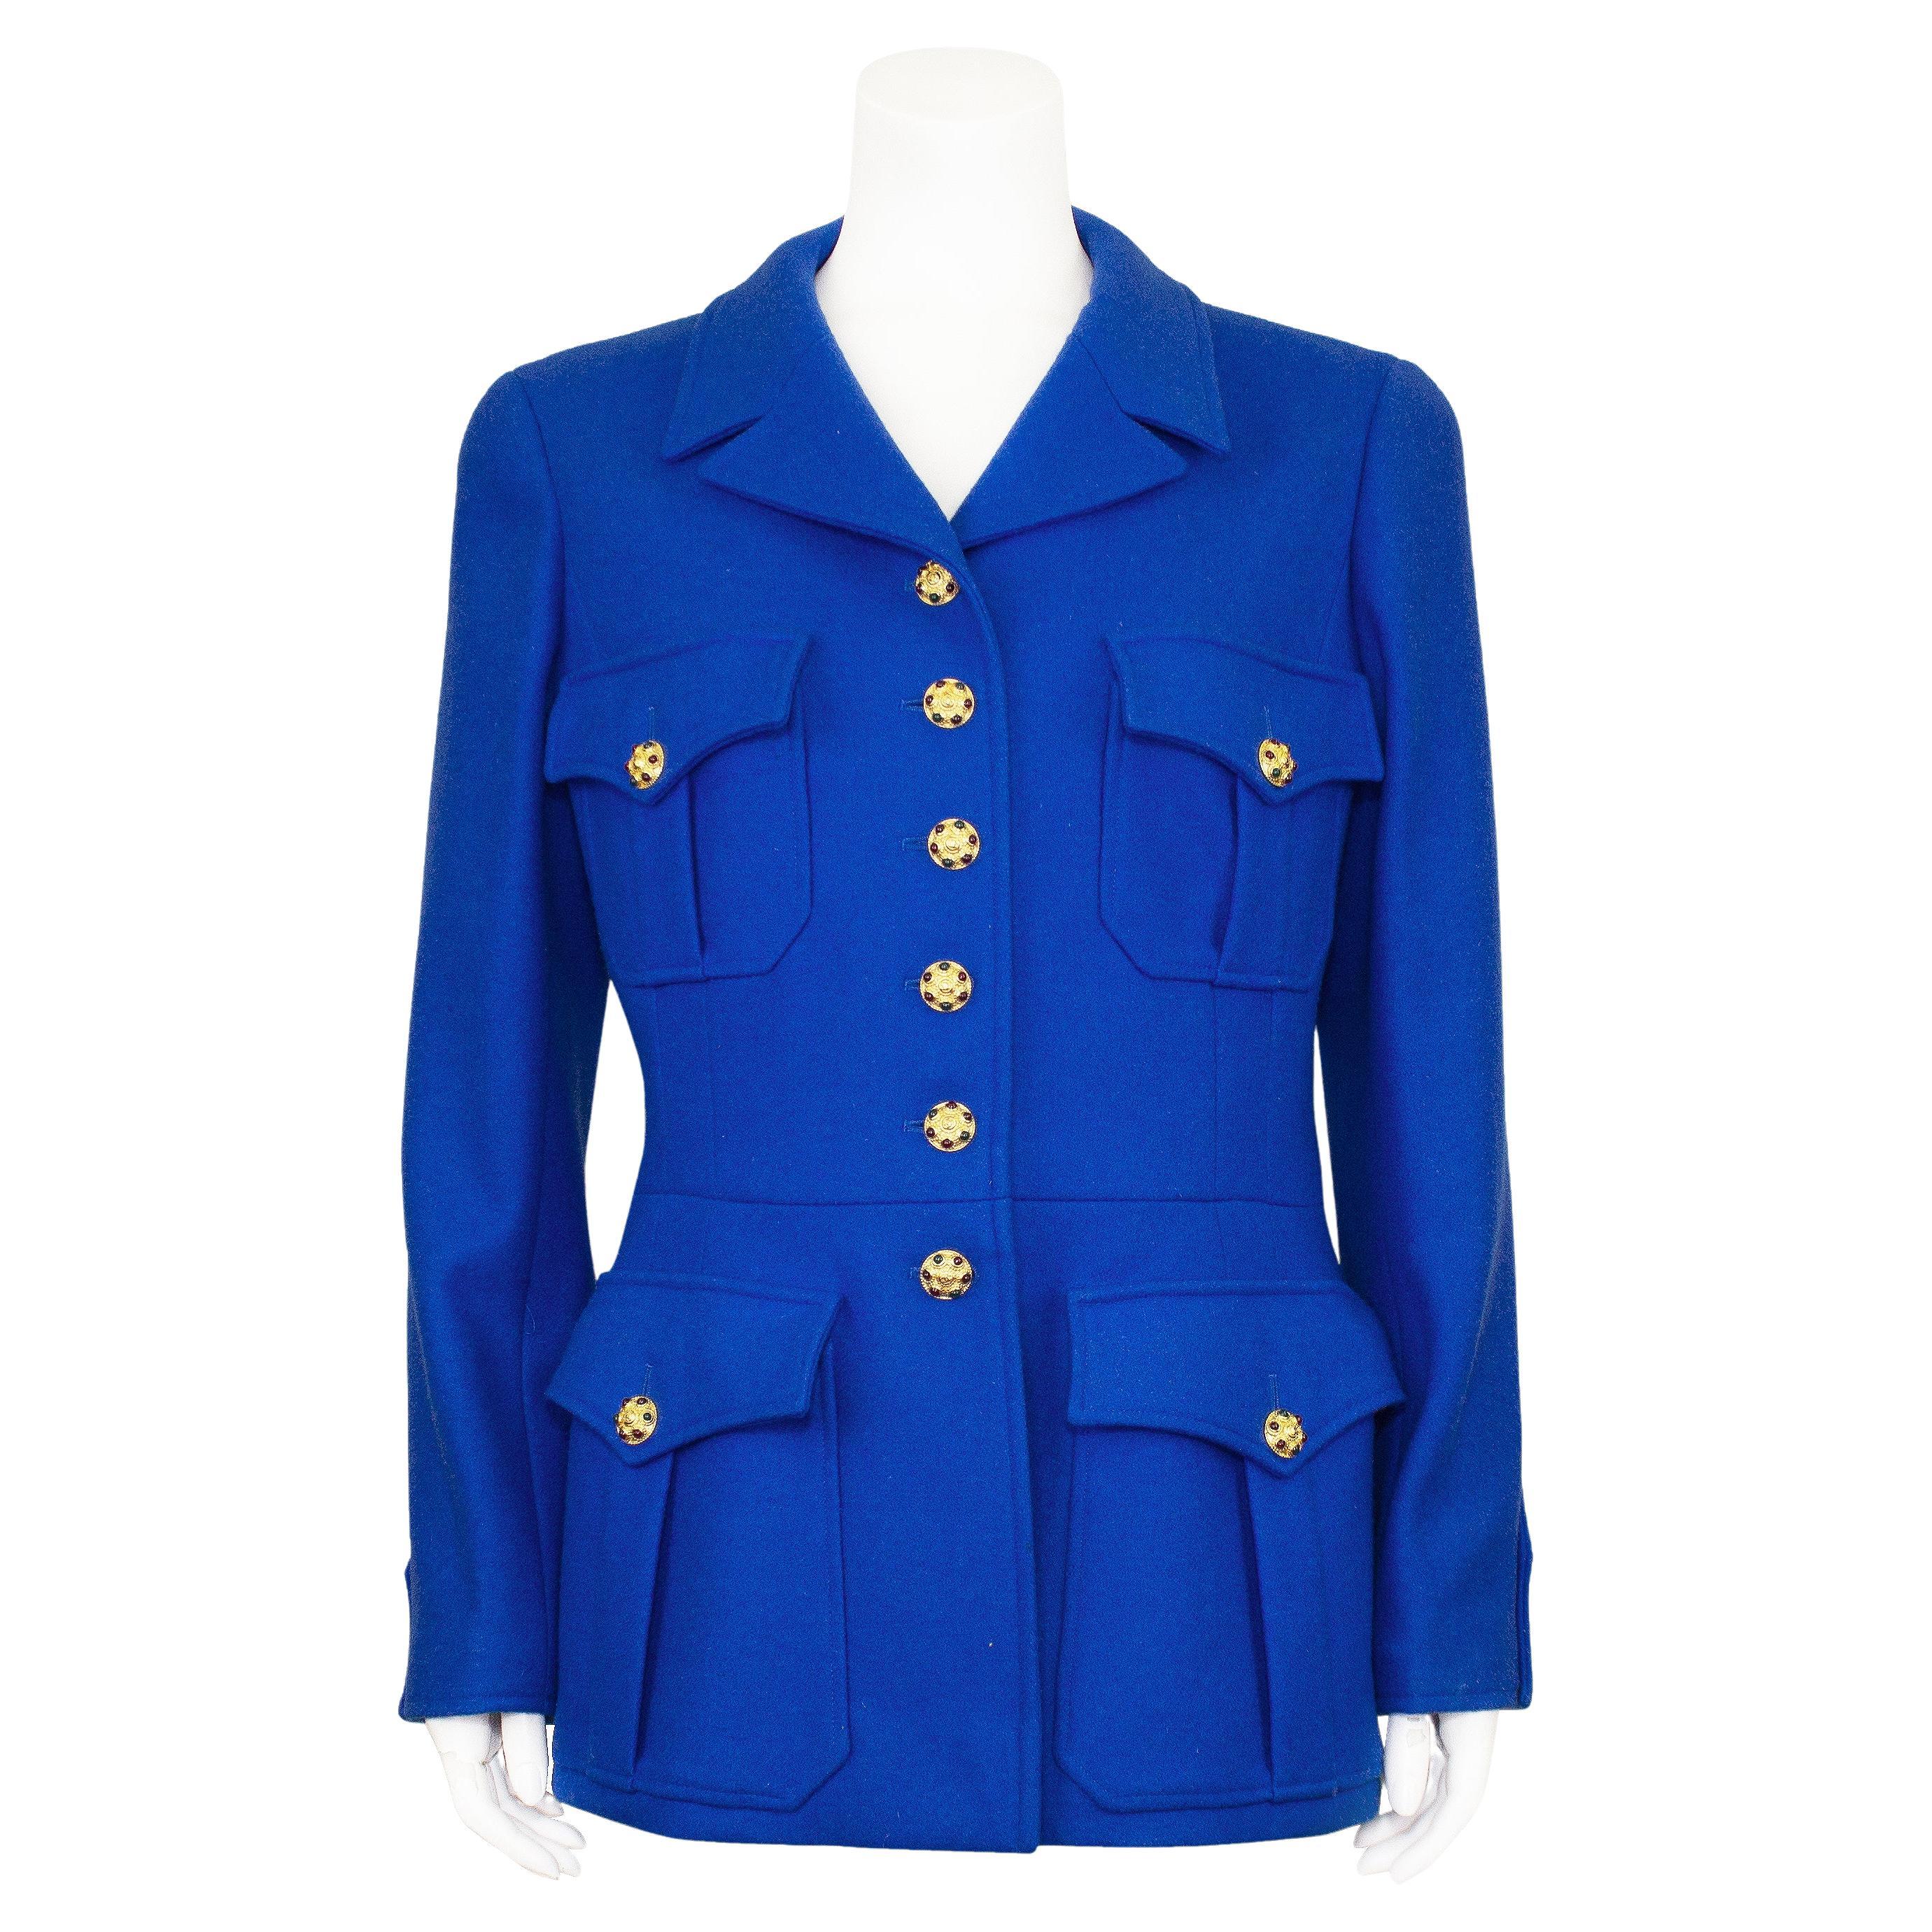 Women's LOUIS VUITTON Uniform wool Navy Blue jacket blazer